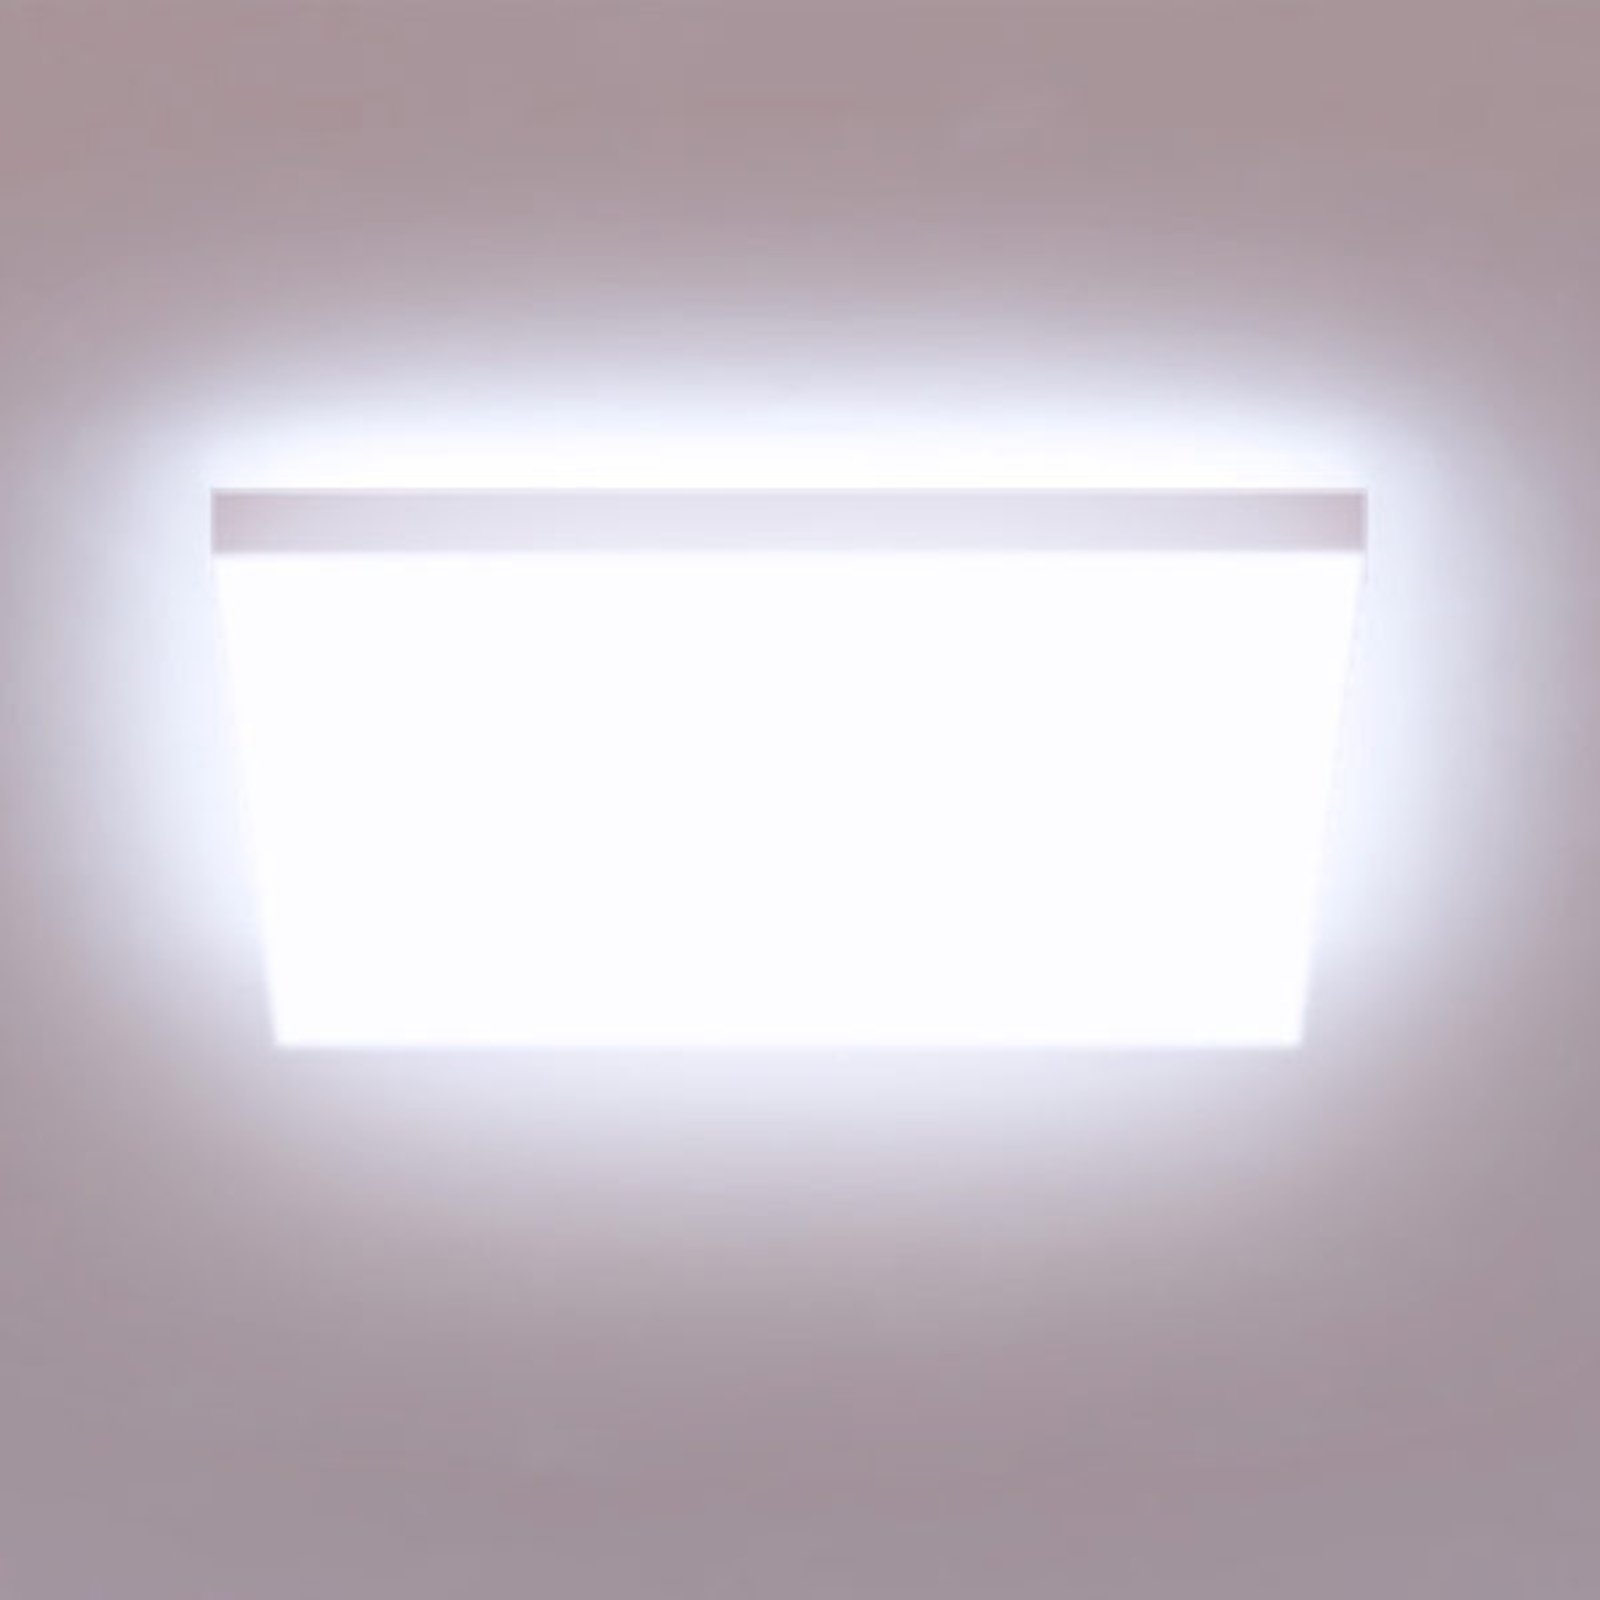 Müller Licht tint LED-panel Loris, 45x45cm